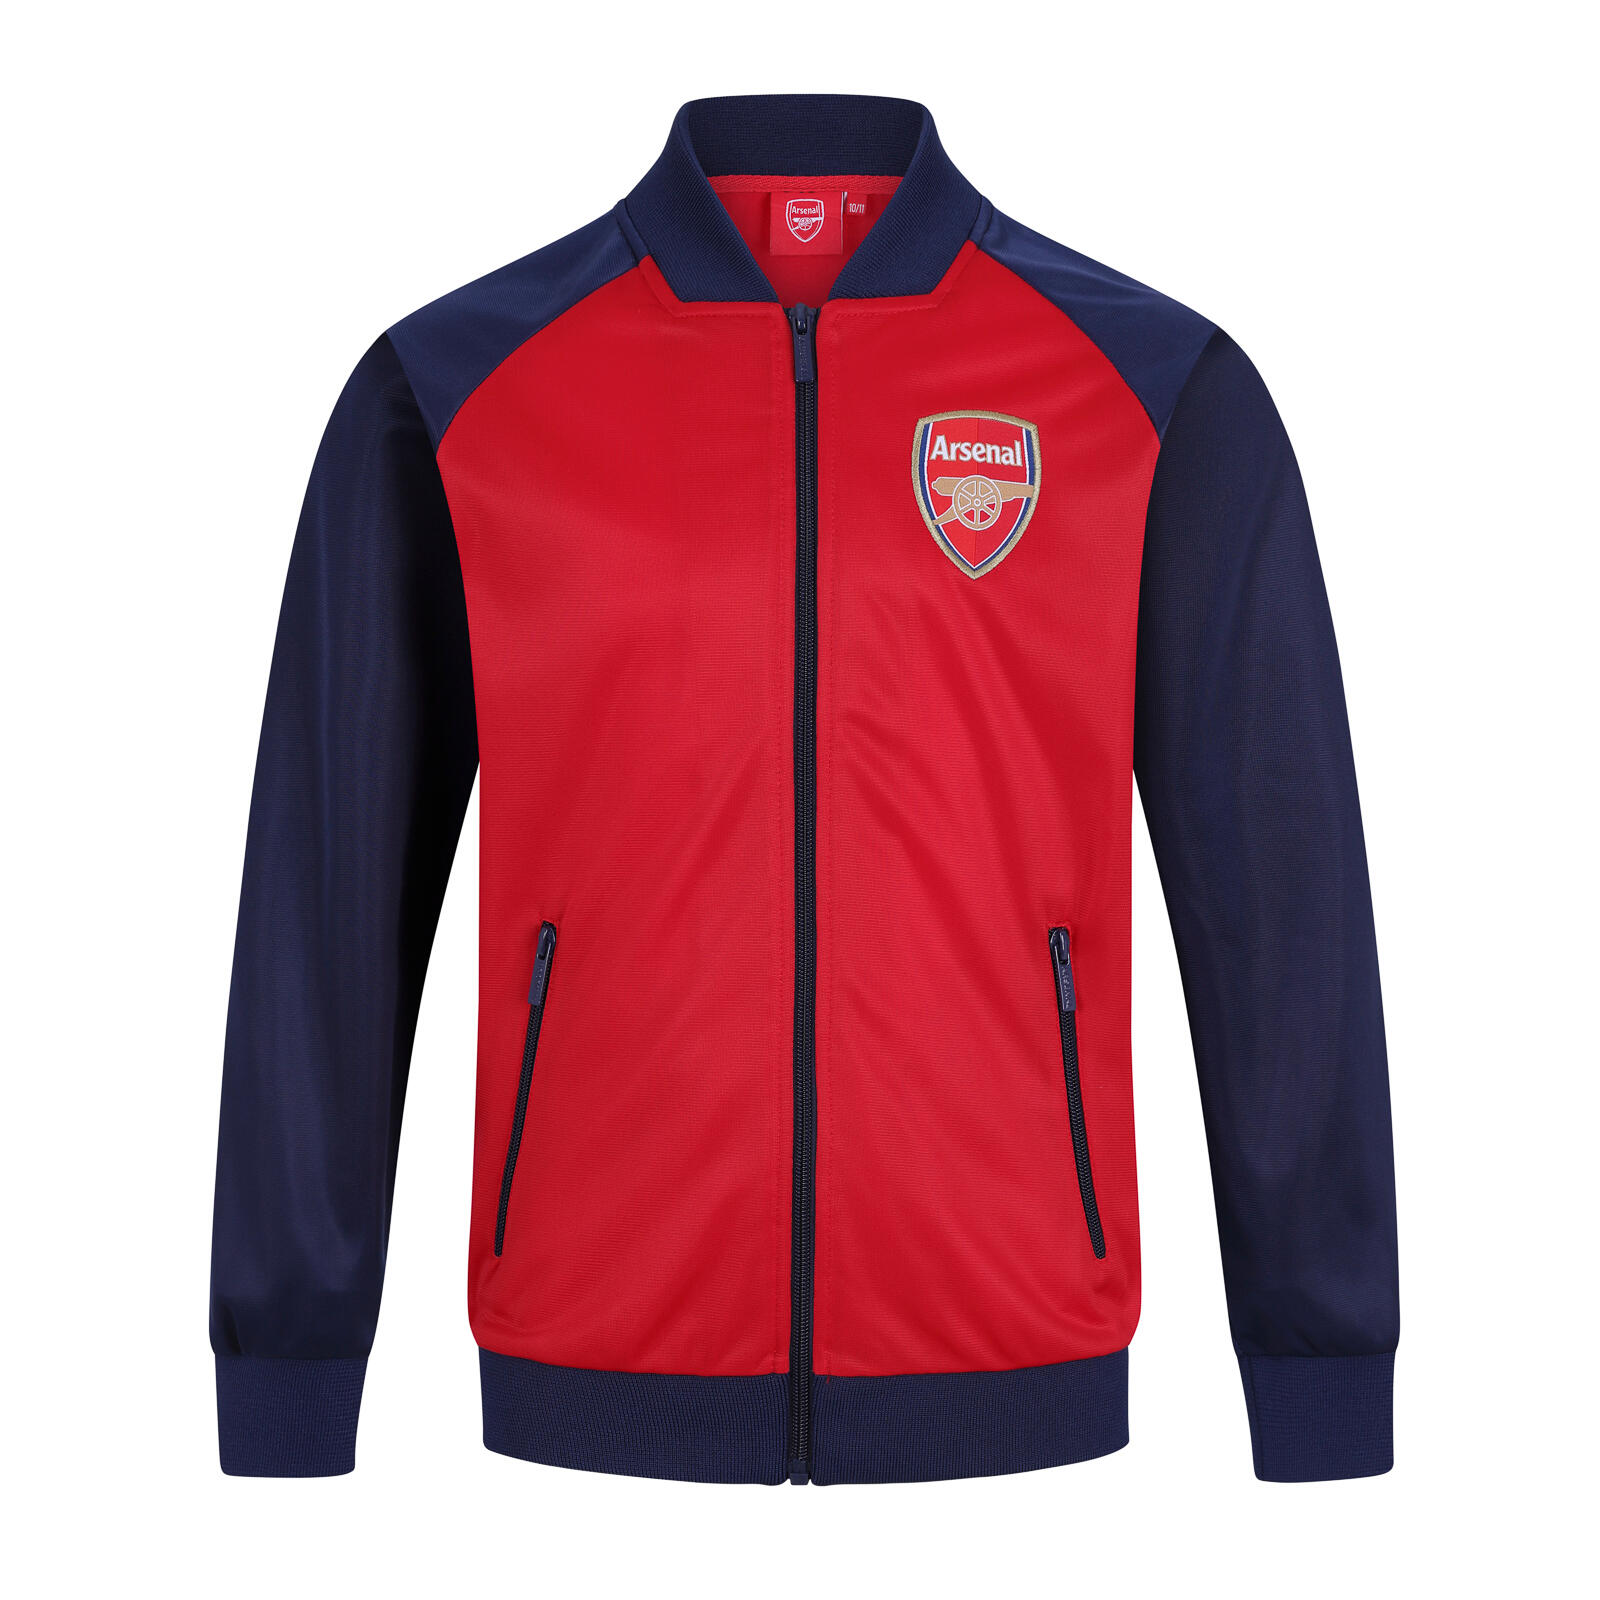 ARSENAL Arsenal FC Boys Jacket Track Top Retro Kids OFFICIAL Football Gift